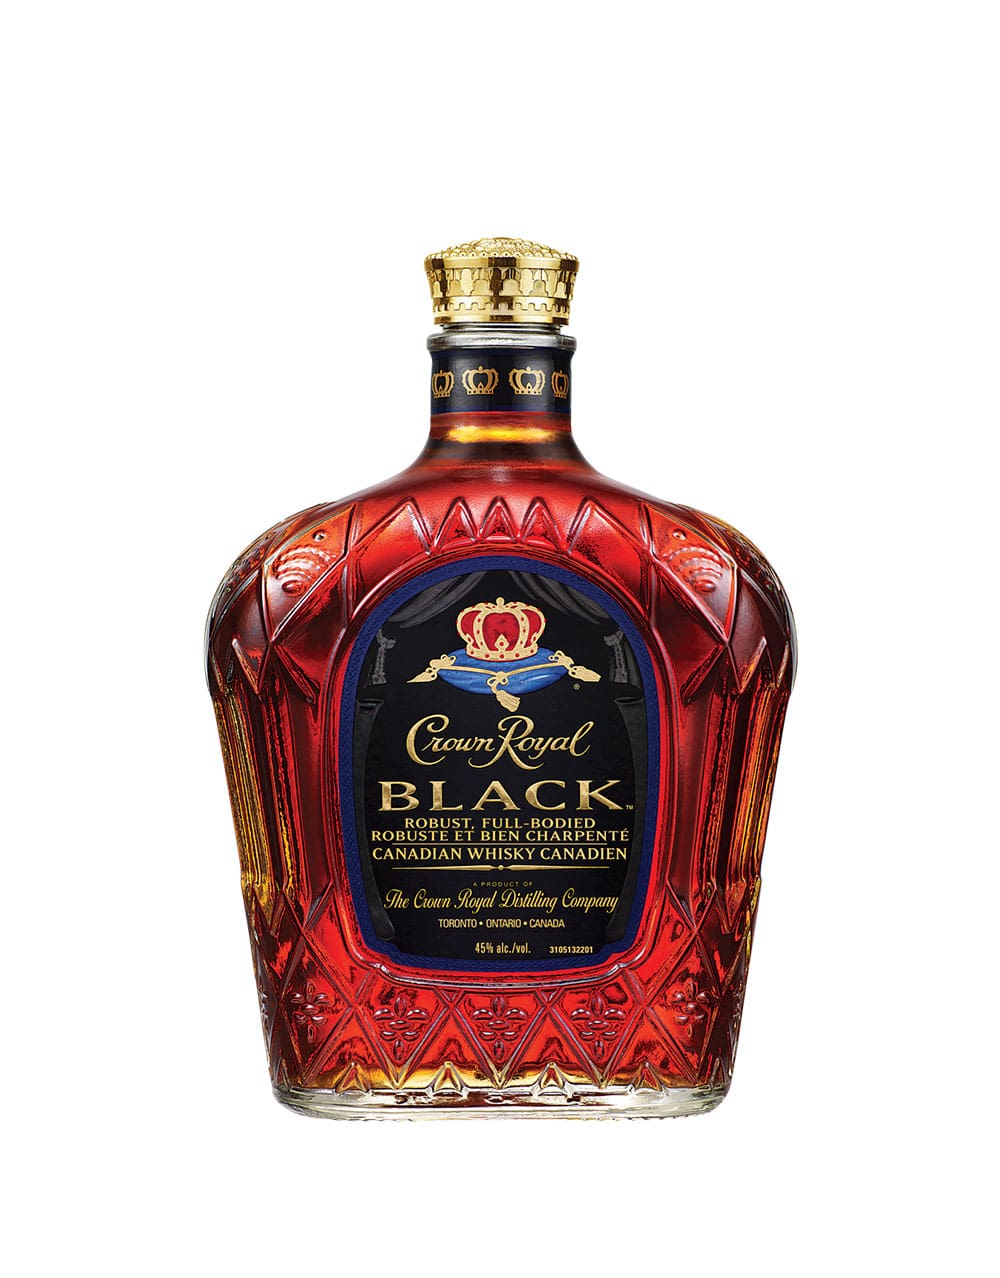 Shop Crown Royal Black Whiskey online